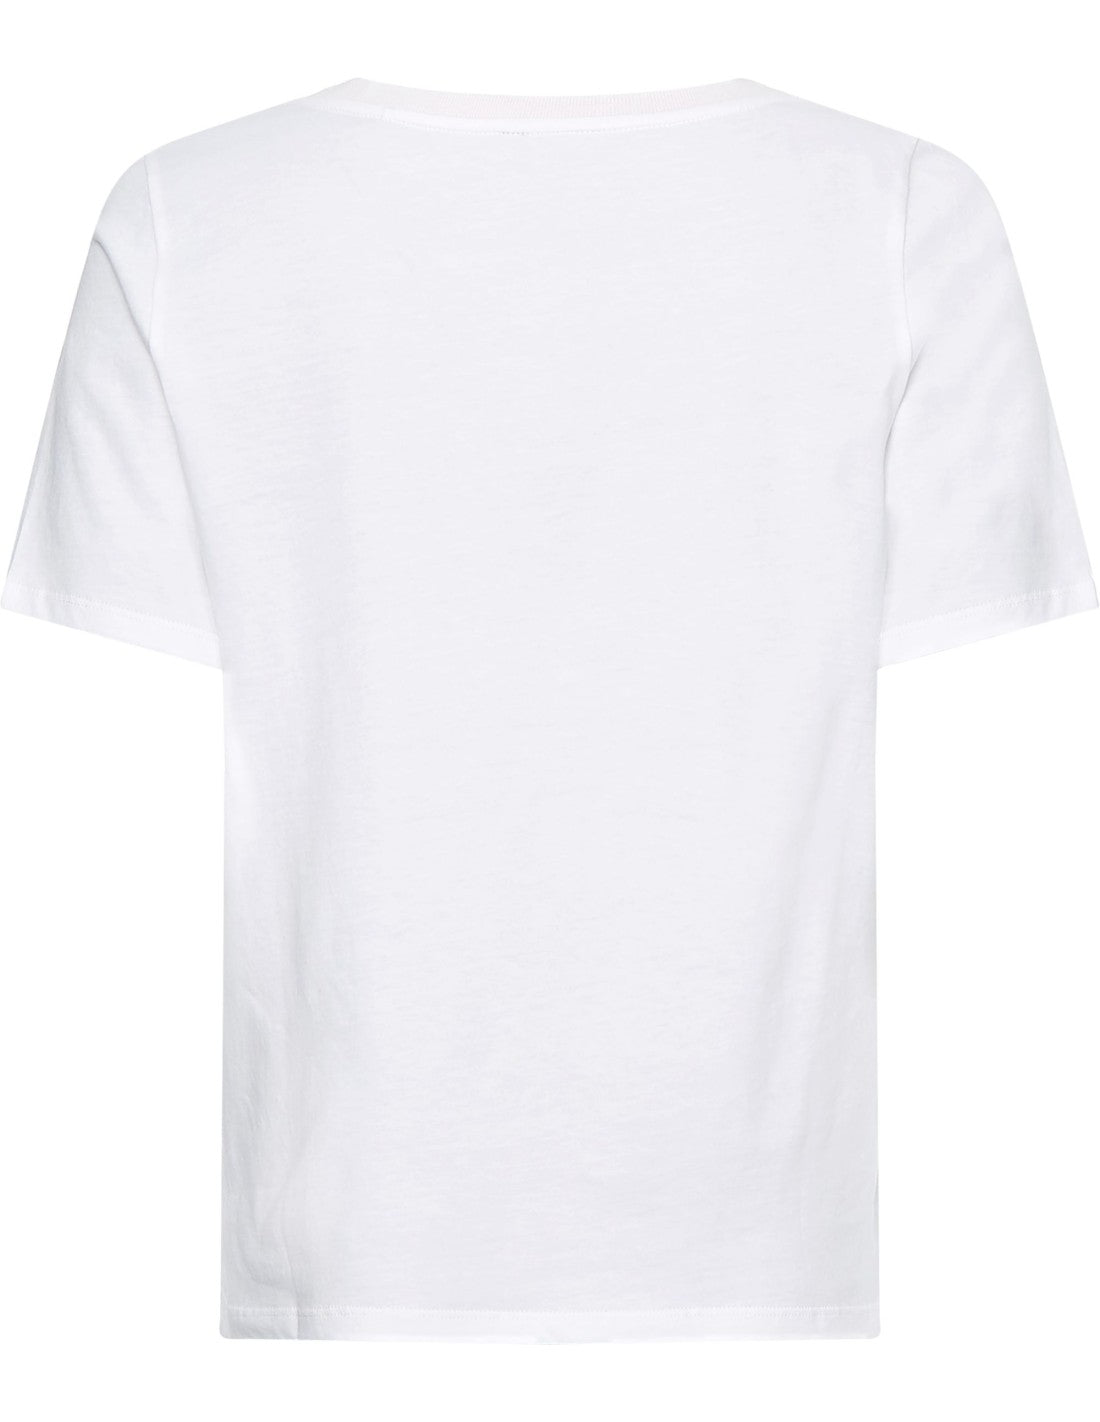 Womens Graphic Short Sleeve T-Shirt